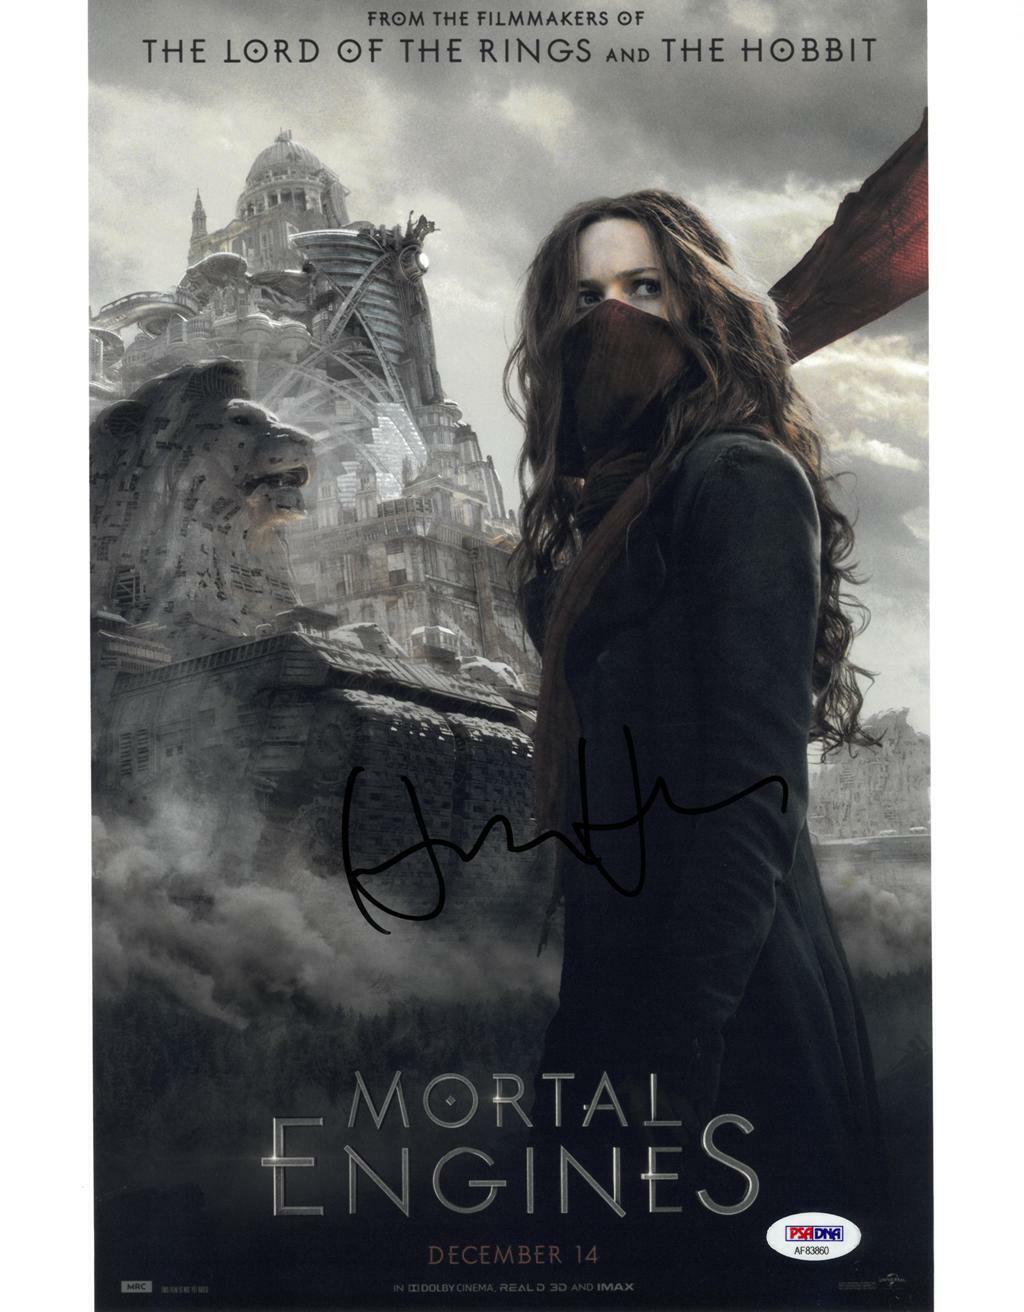 Hera Hilmar Signed Mortal Engines Autographed 11x14 Photo Poster painting PSA/DNA #AF83860